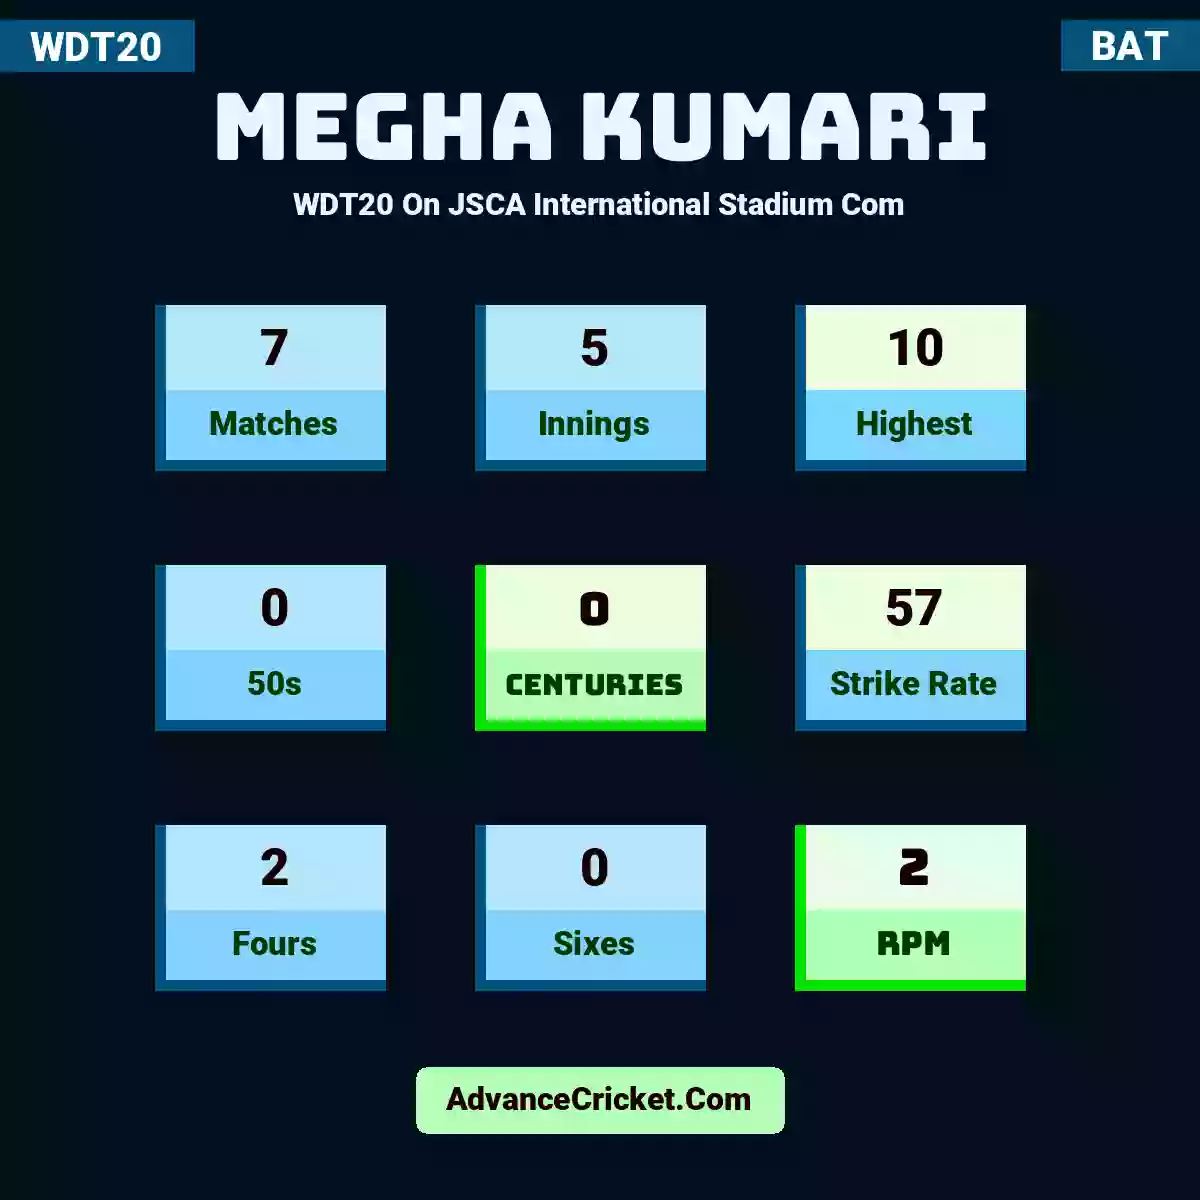 Megha Kumari WDT20  On JSCA International Stadium Com, Megha Kumari played 7 matches, scored 10 runs as highest, 0 half-centuries, and 0 centuries, with a strike rate of 57. M.Kumari hit 2 fours and 0 sixes, with an RPM of 2.